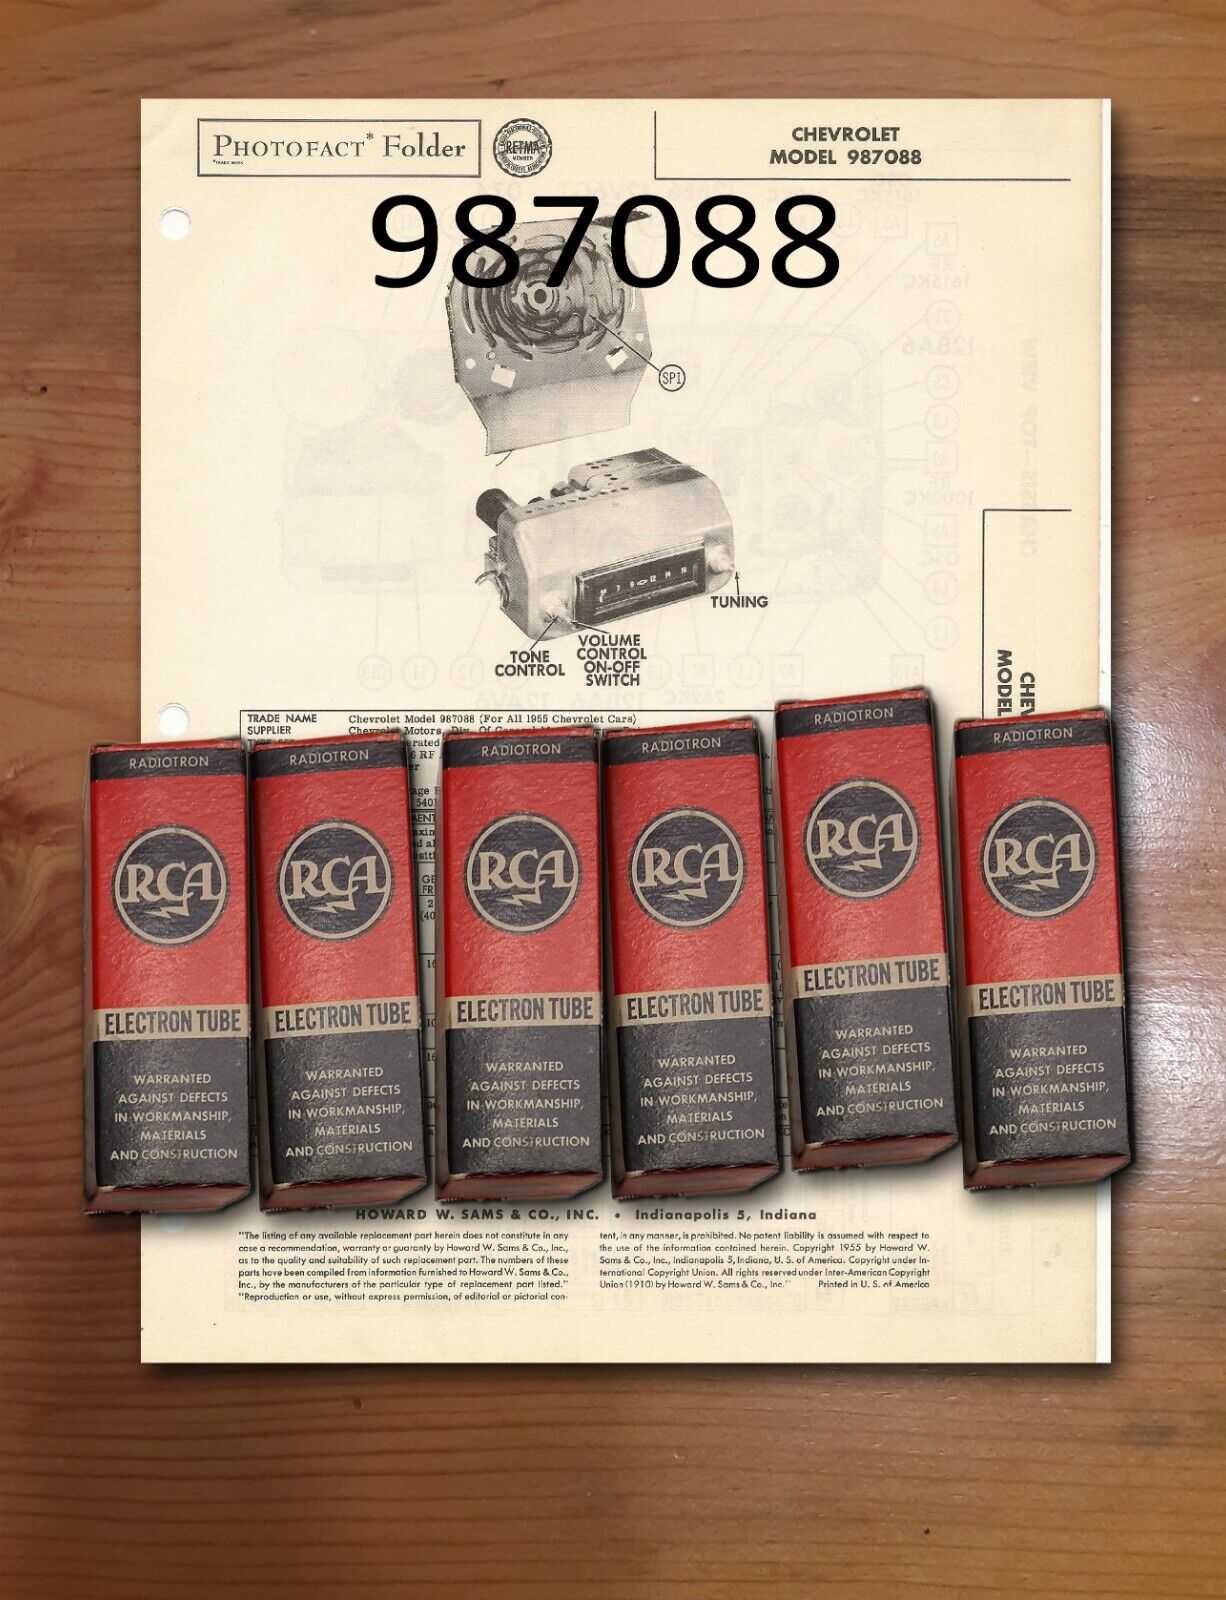 Vintage 1955-56 Chevy Manual Radio #987088/987366 tube set plus FREE Photofacts